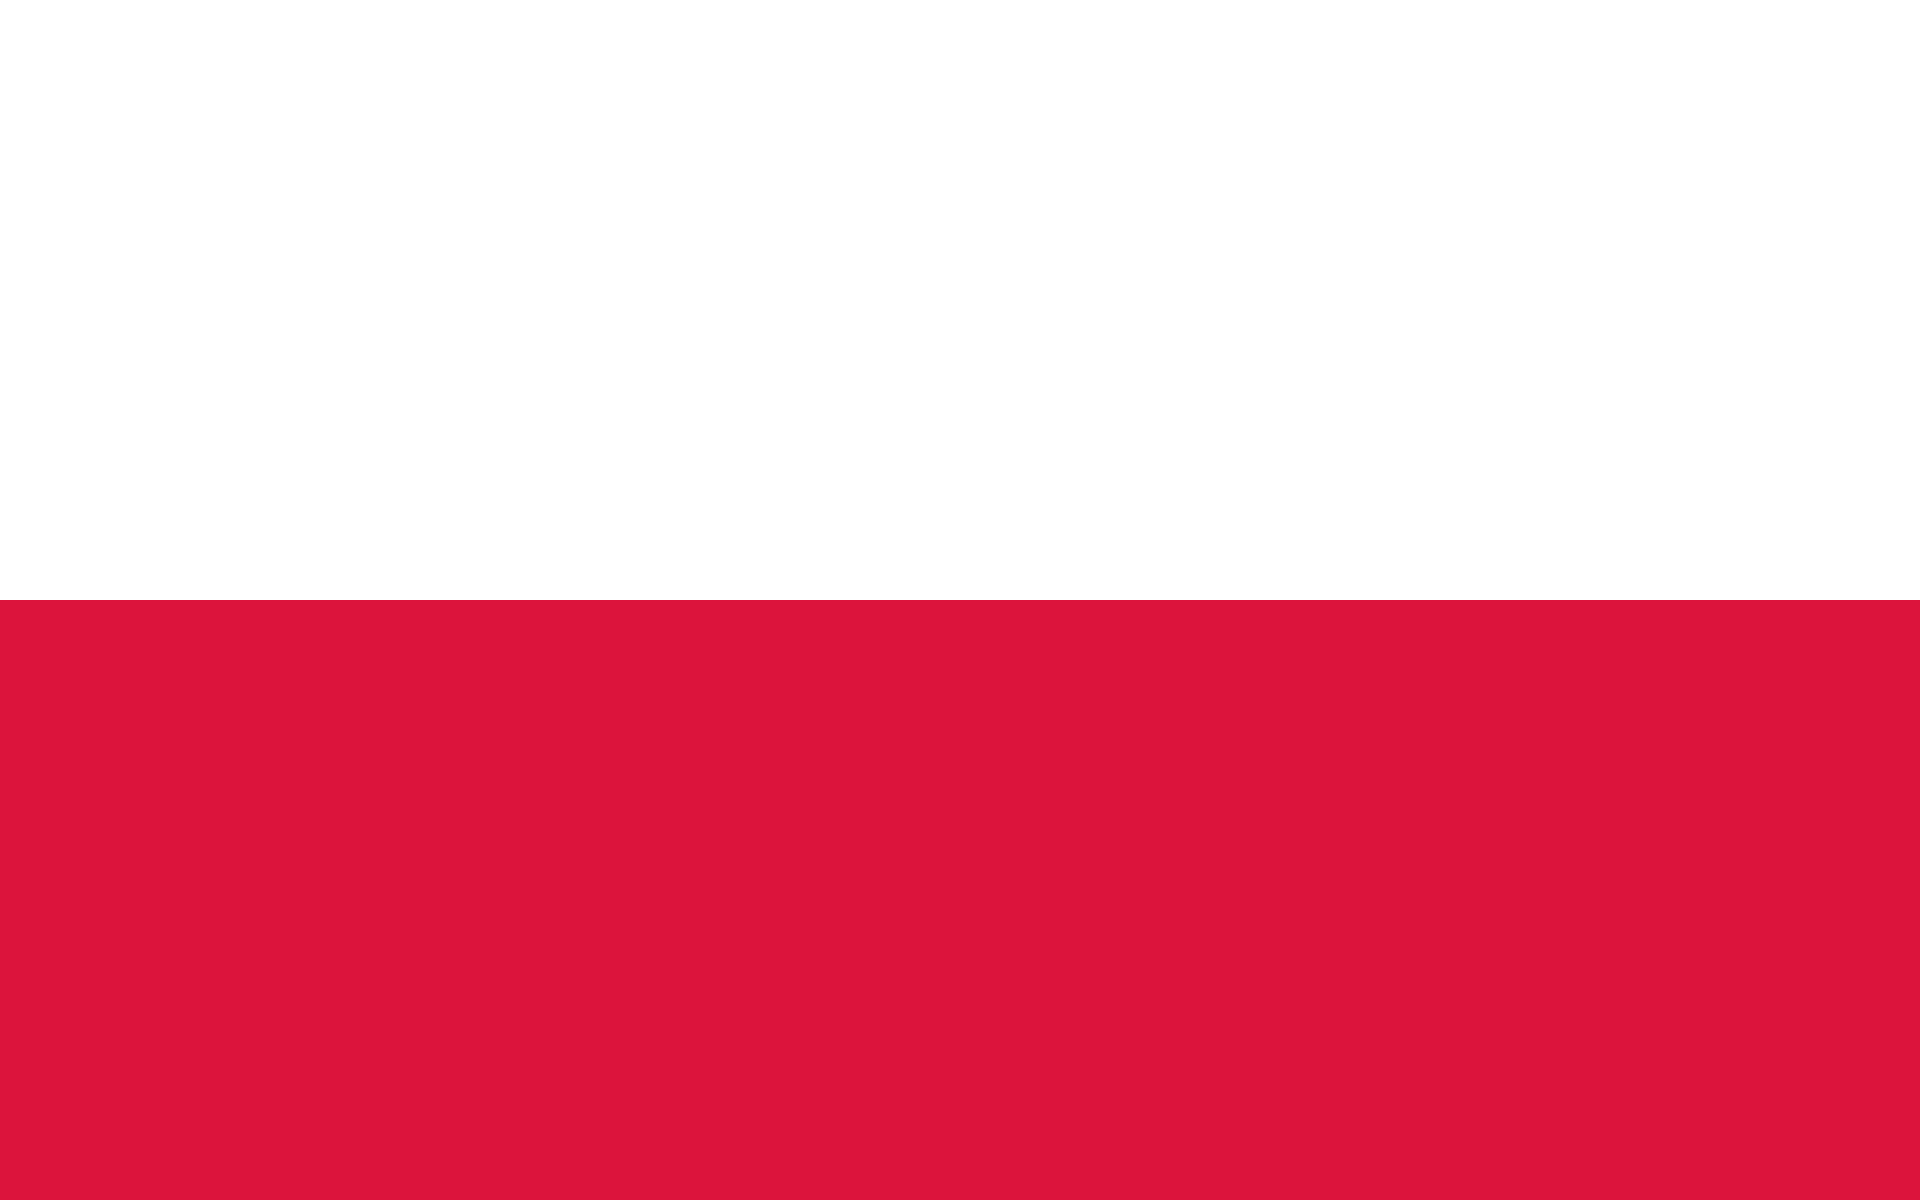 Gastlandflagge Polen 40X60cm